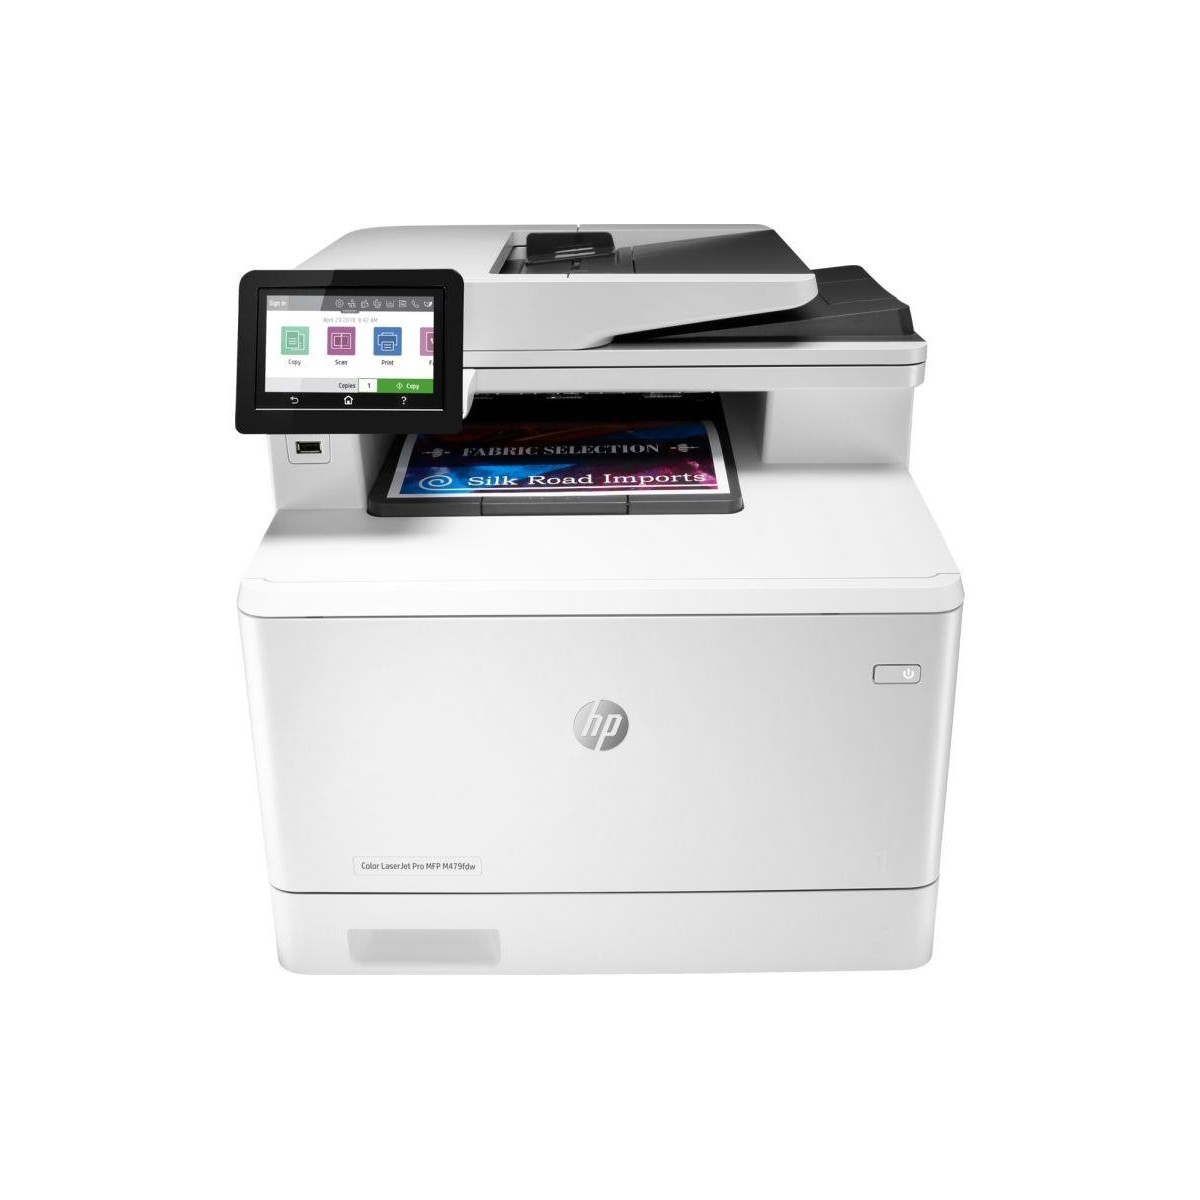 HP Color LaserJet Pro M479fdw - Laser - Colour printing - 600 x 600 DPI - Colour copying - A4 - Black - White